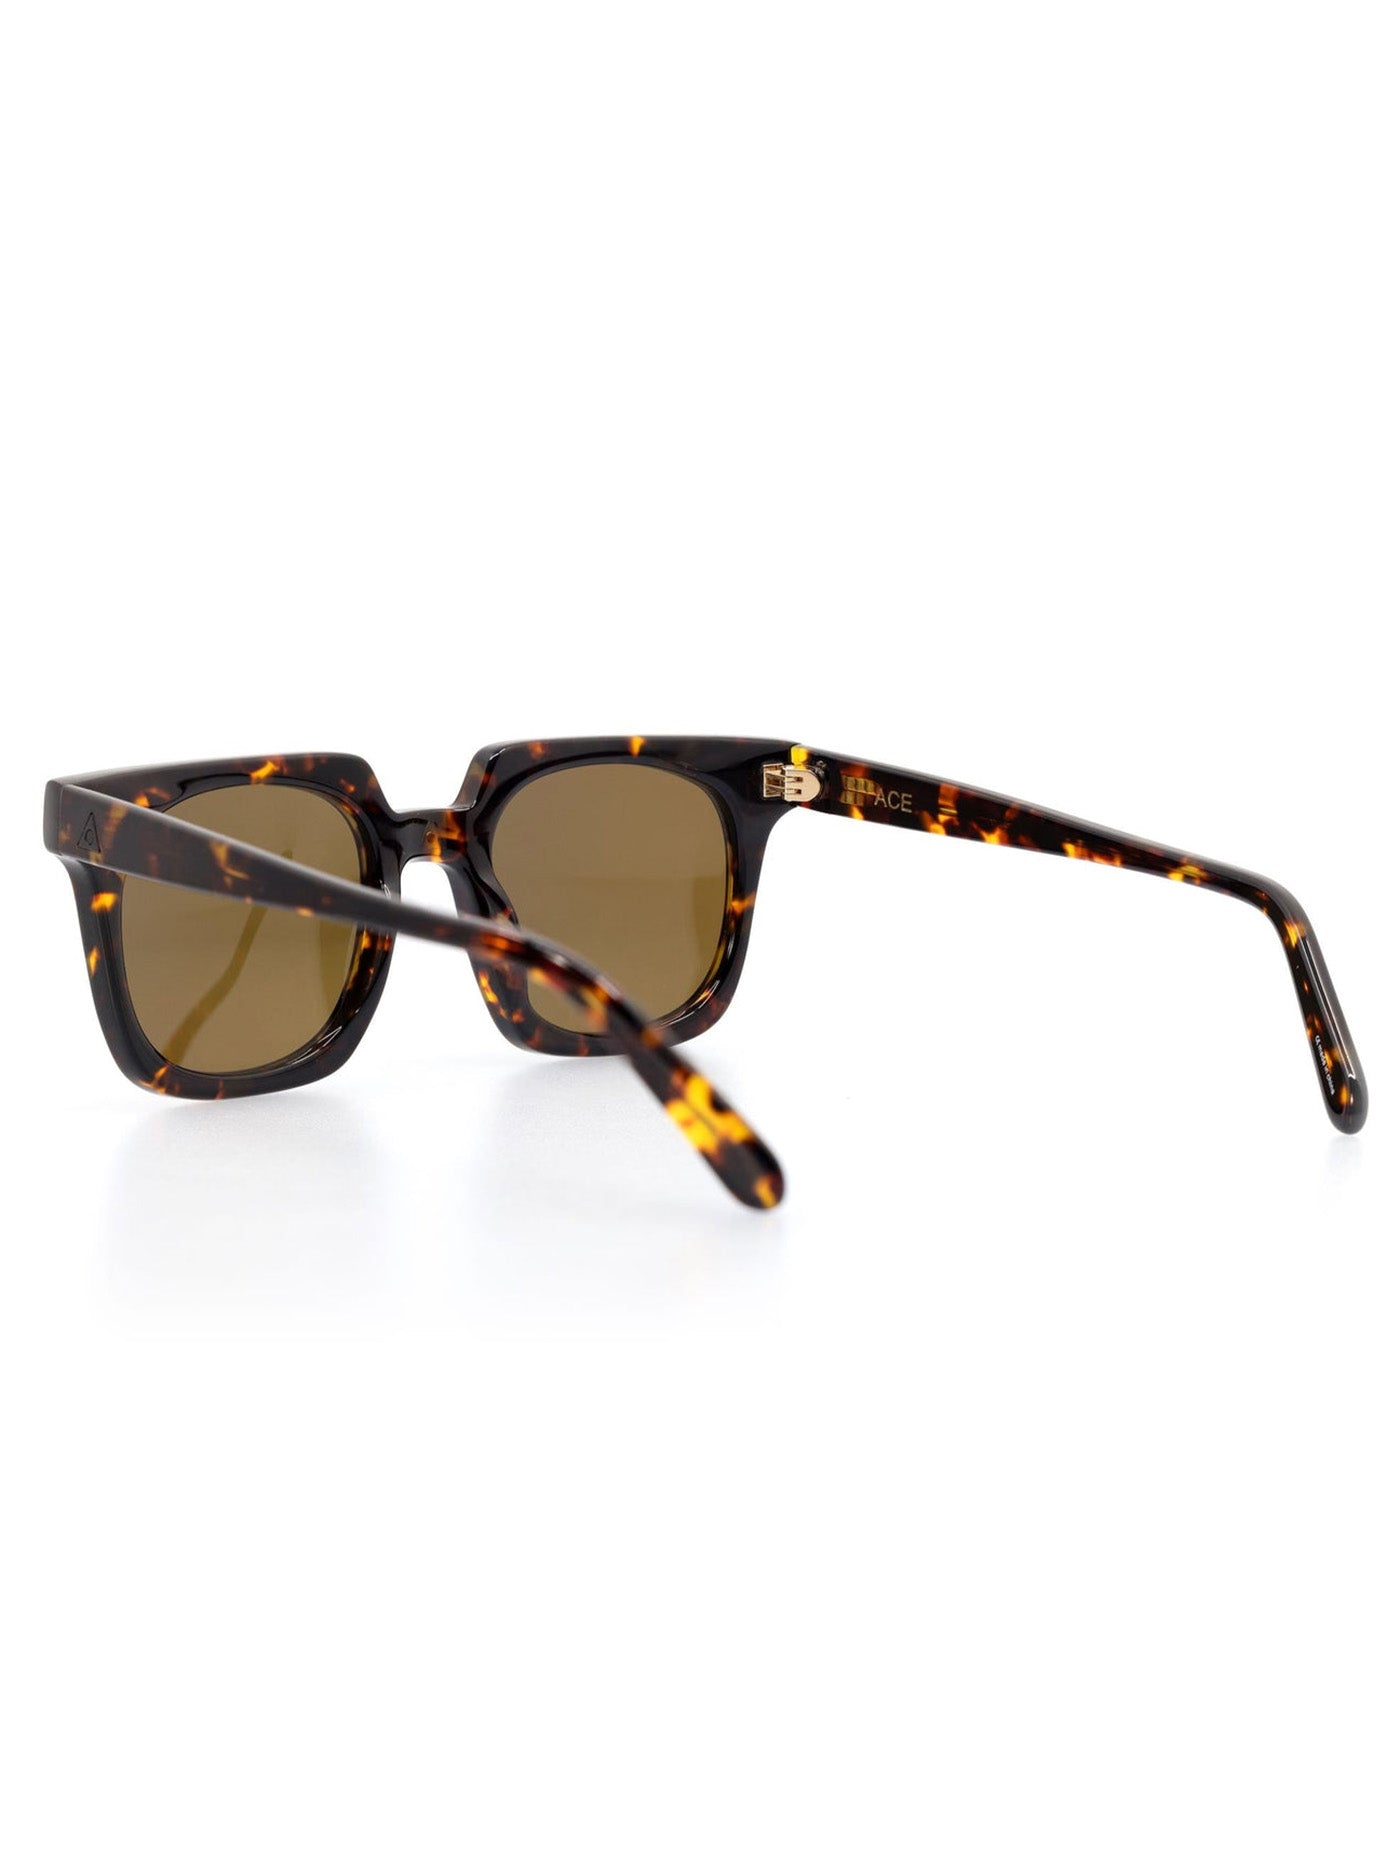 Ashbury Ace Tortoise Sunglasses